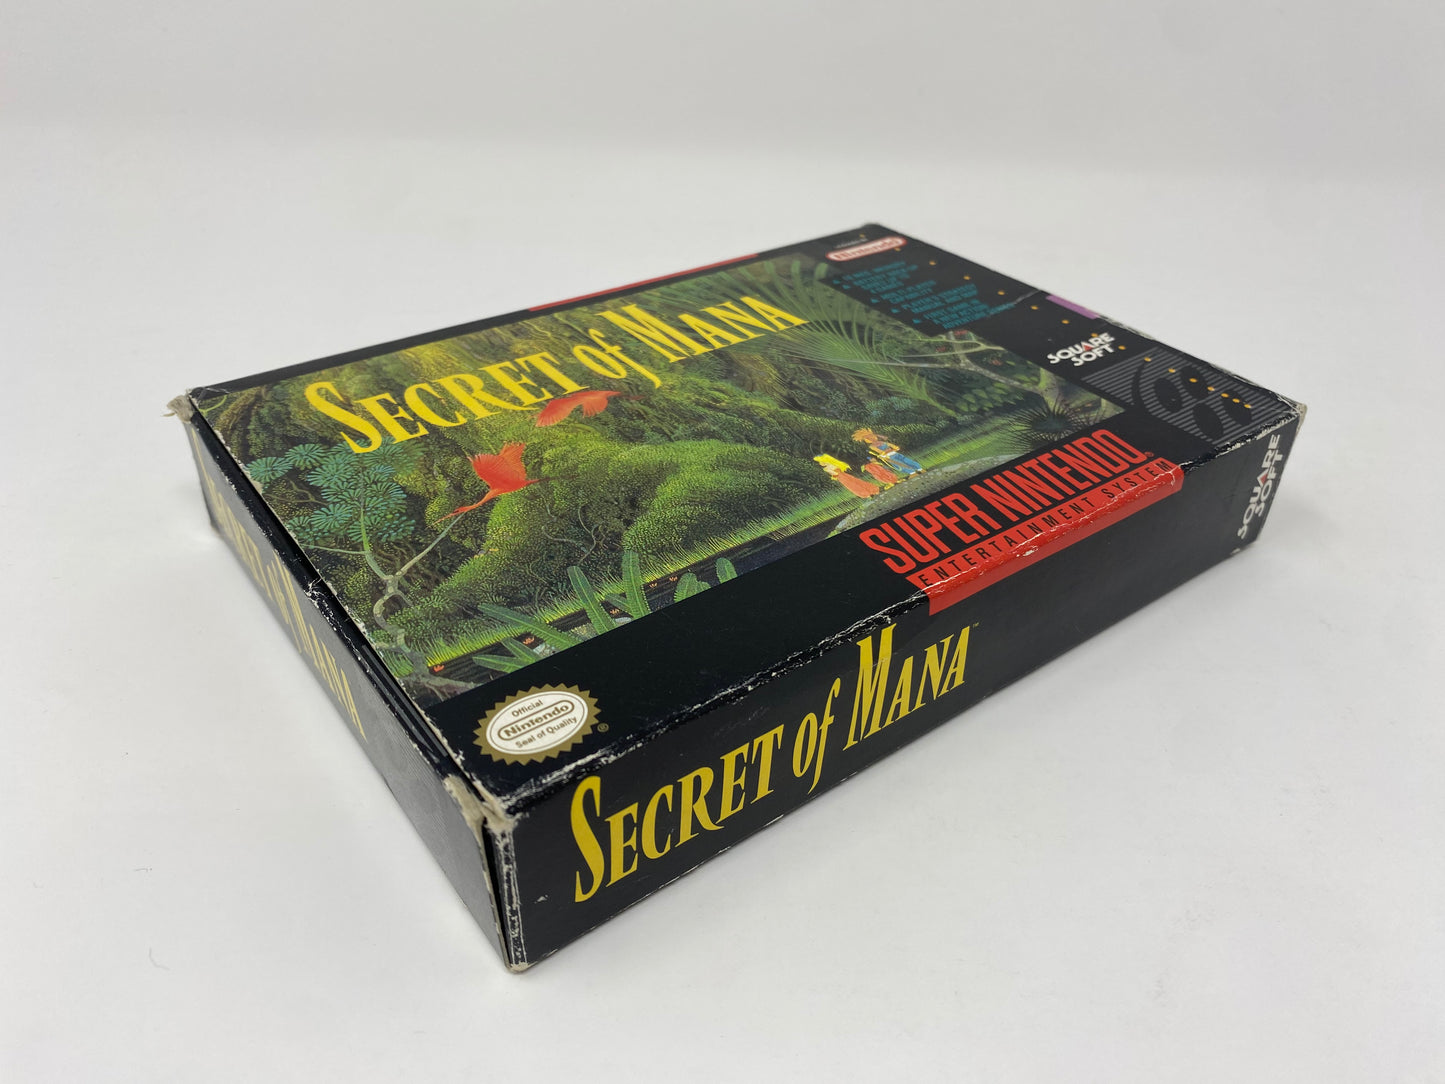 SNES Super Nintendo - Secret of Mana - CIB Complete in Box